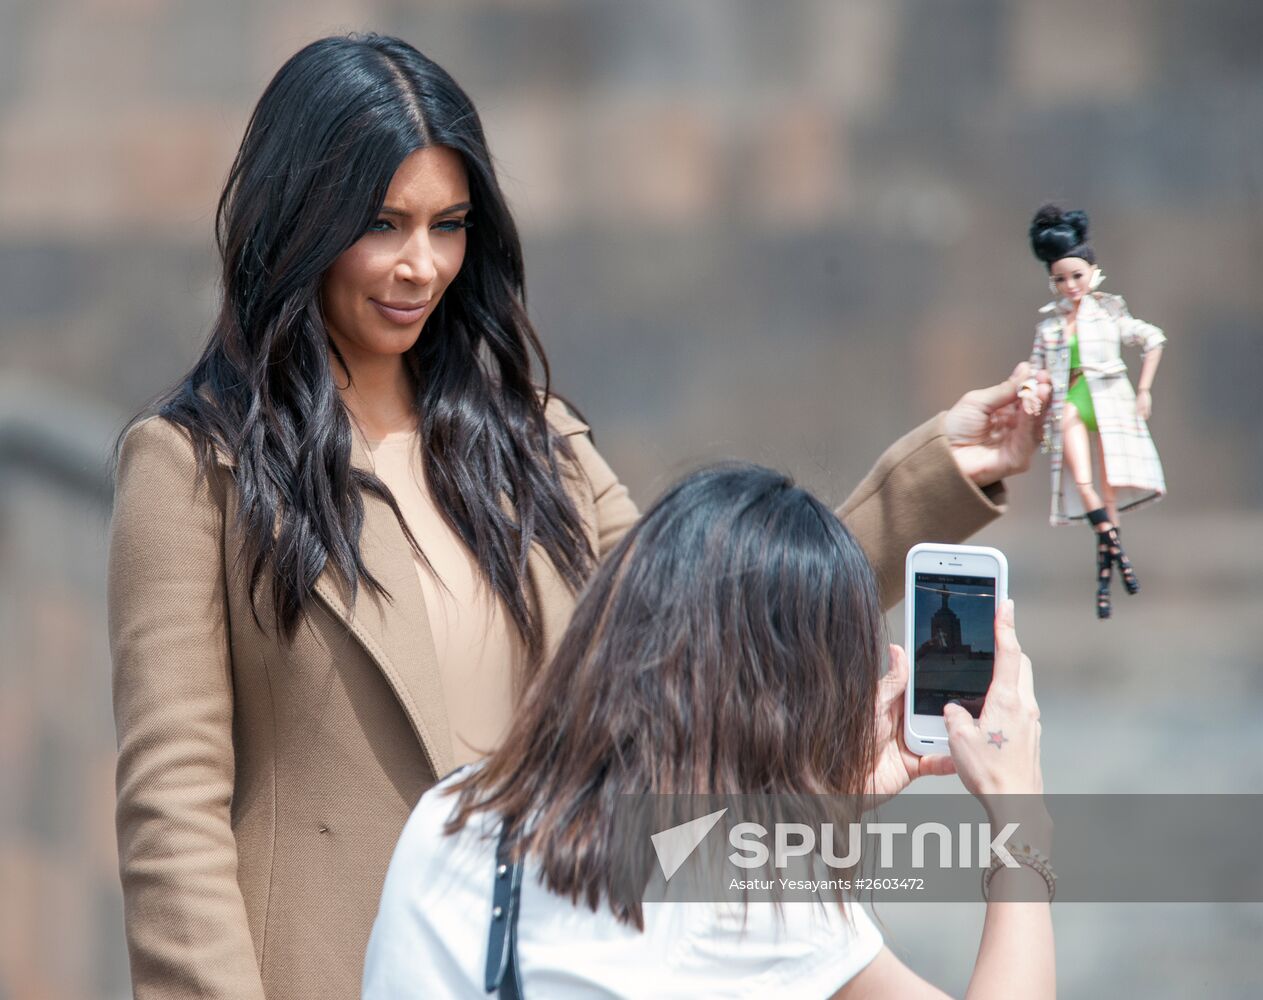 US actress Kim Kardashian attends memorial events on centenary of Armenian genocide